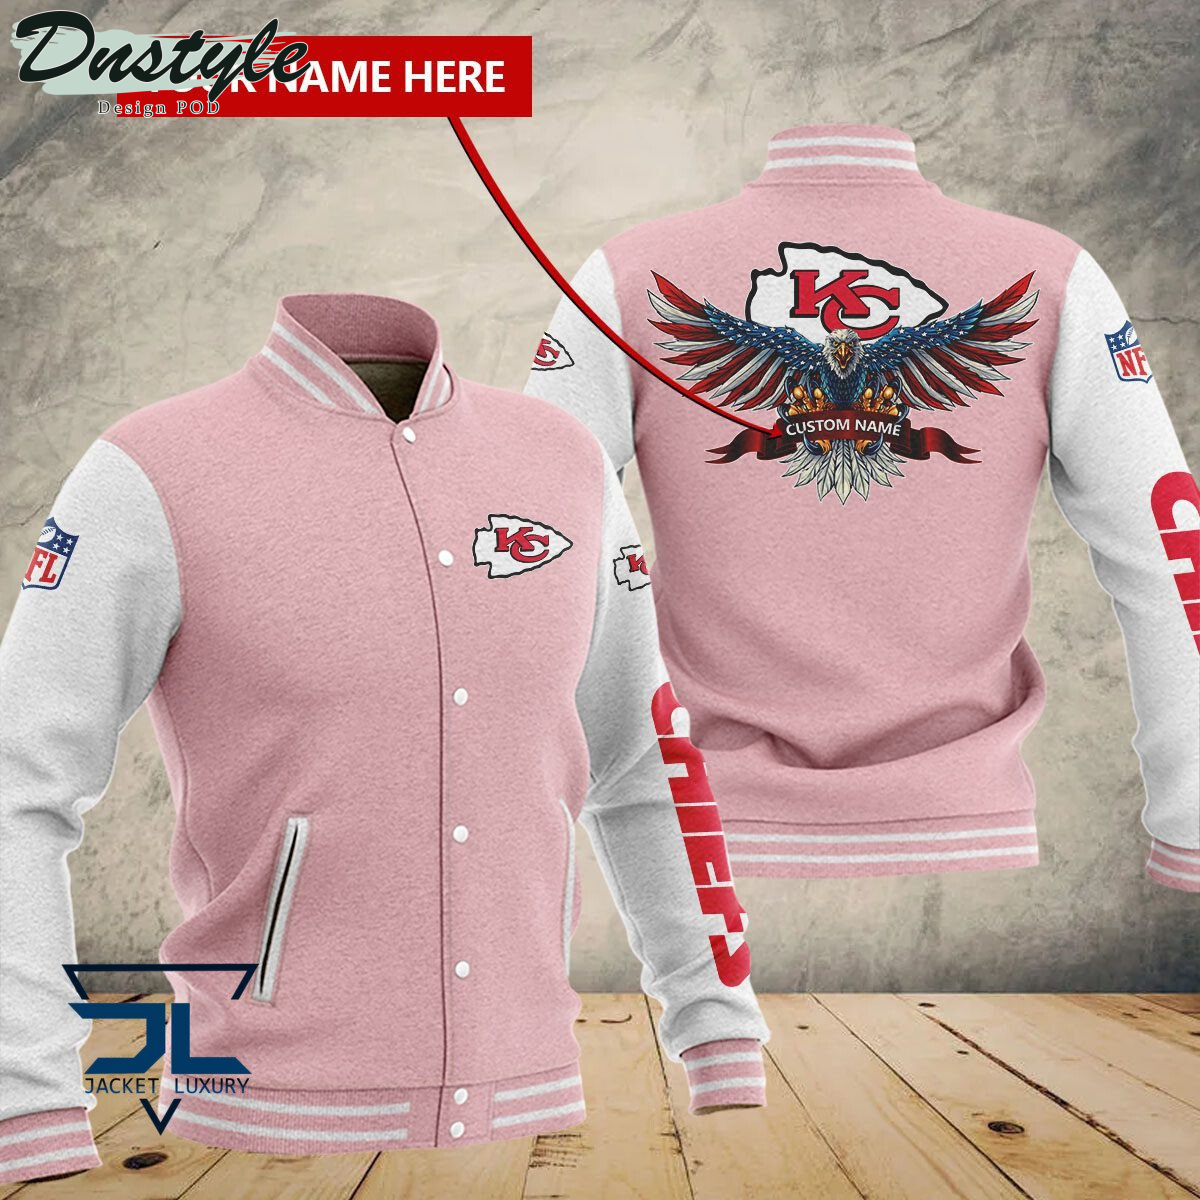 Kansas City Chiefs Eagles Custom Name Baseball Jacket